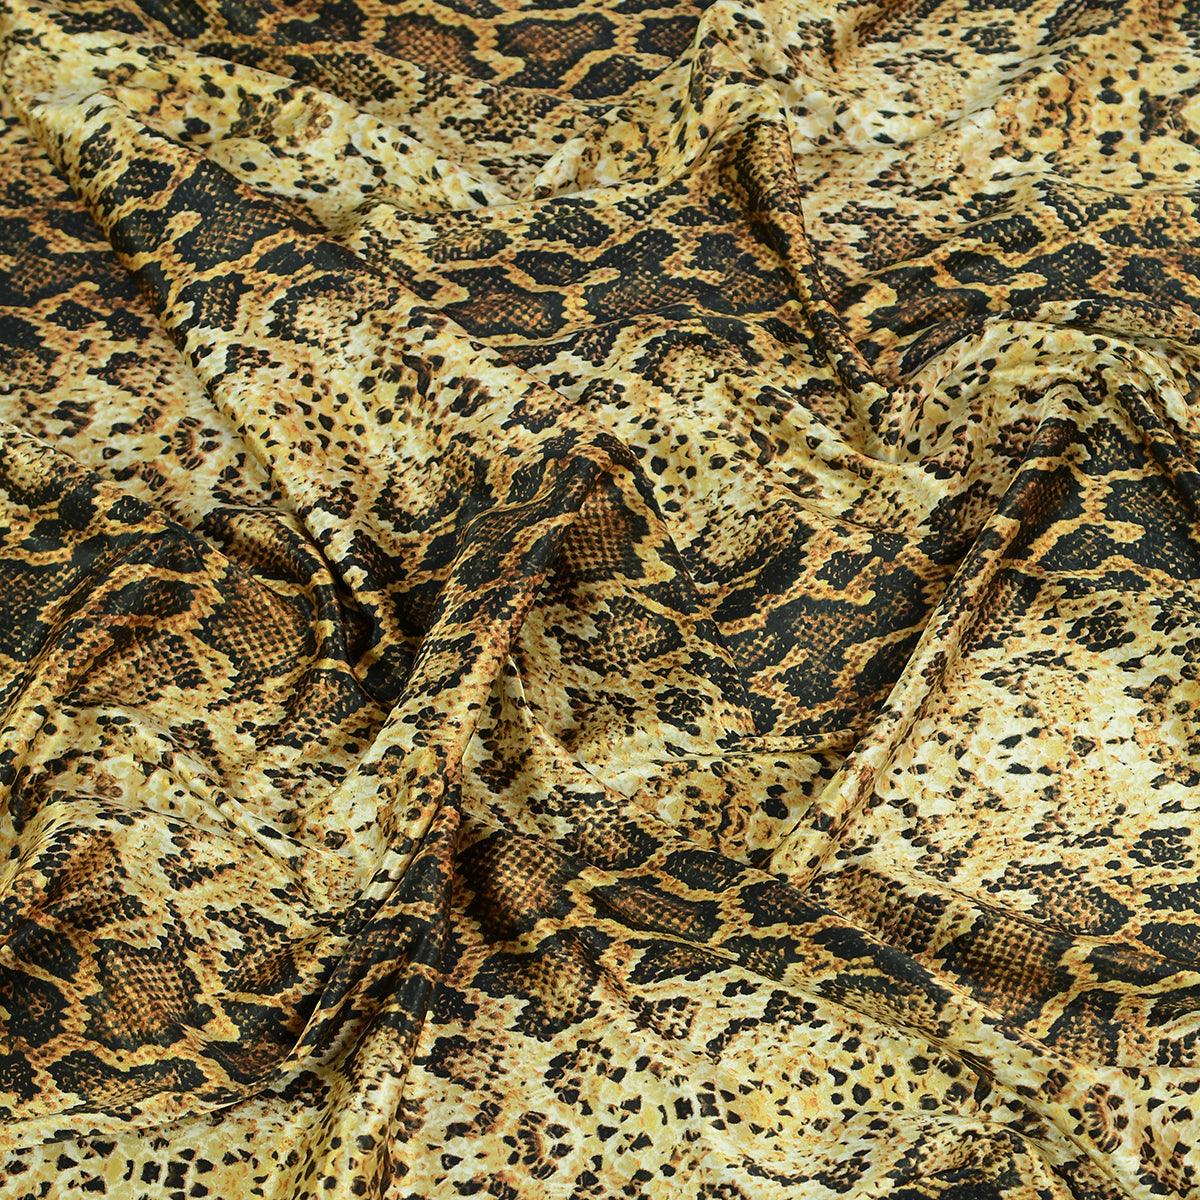 Satin Elastic - Animal Print Leopard